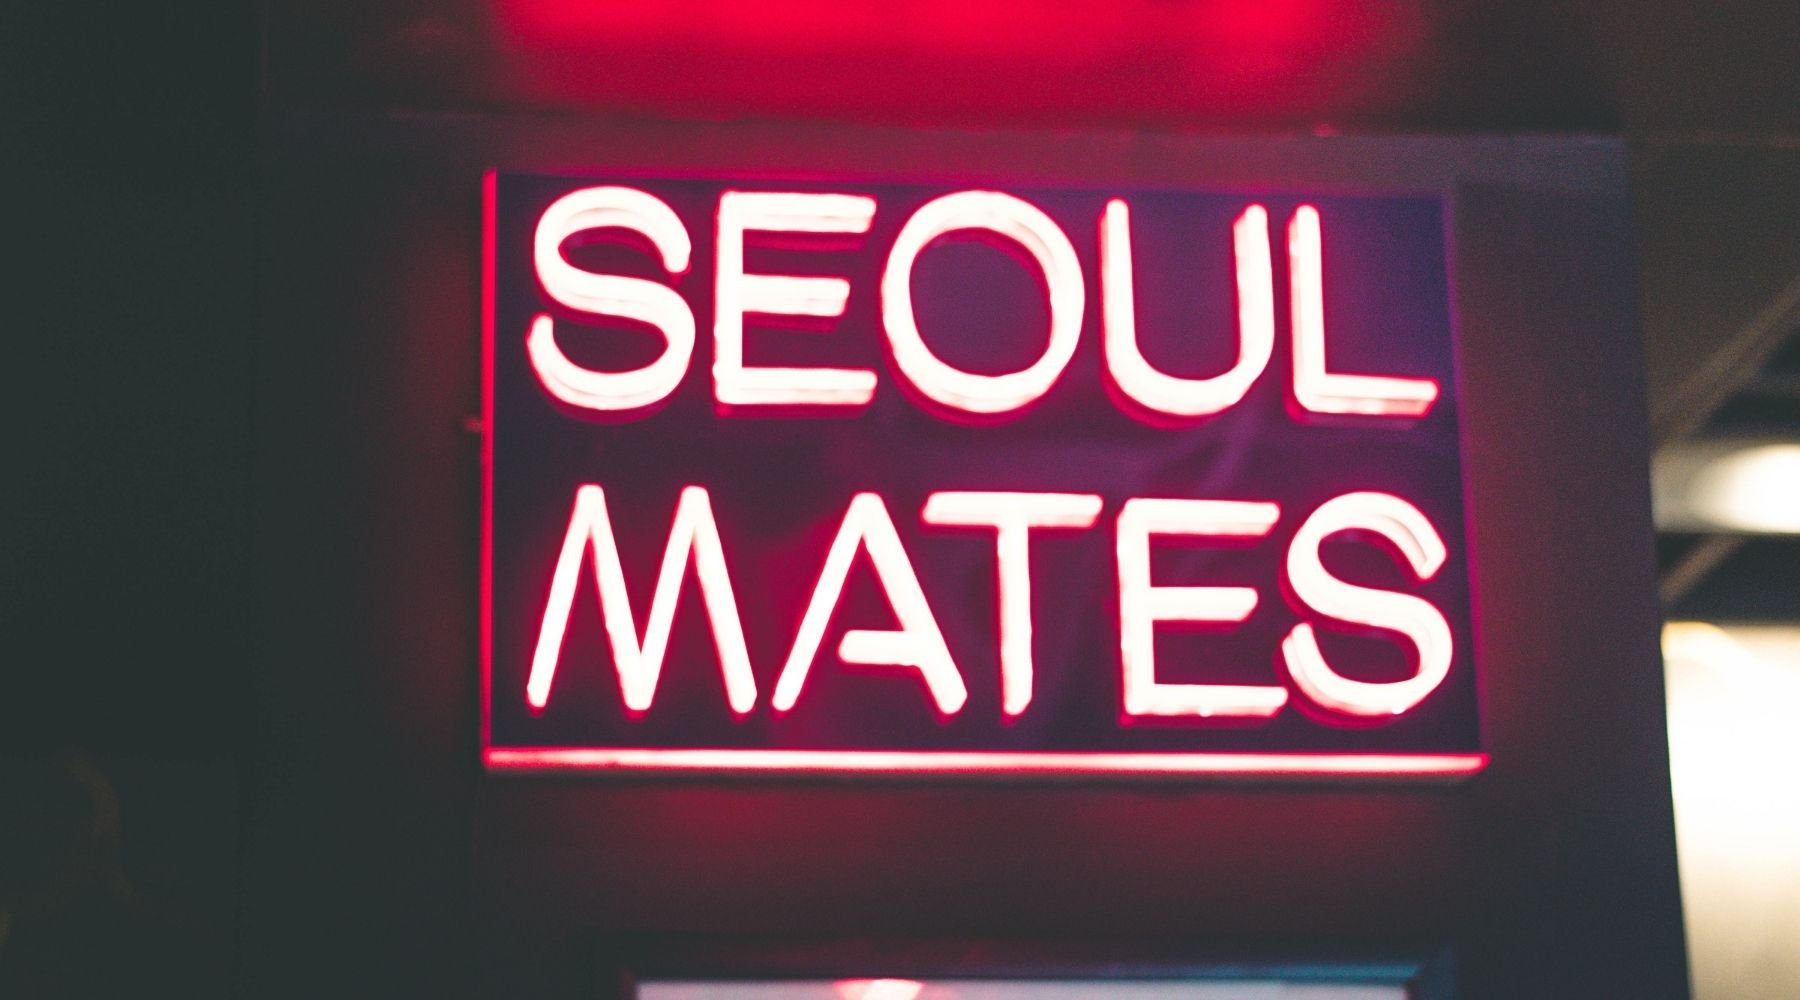 Seoul Mates Neon Sign